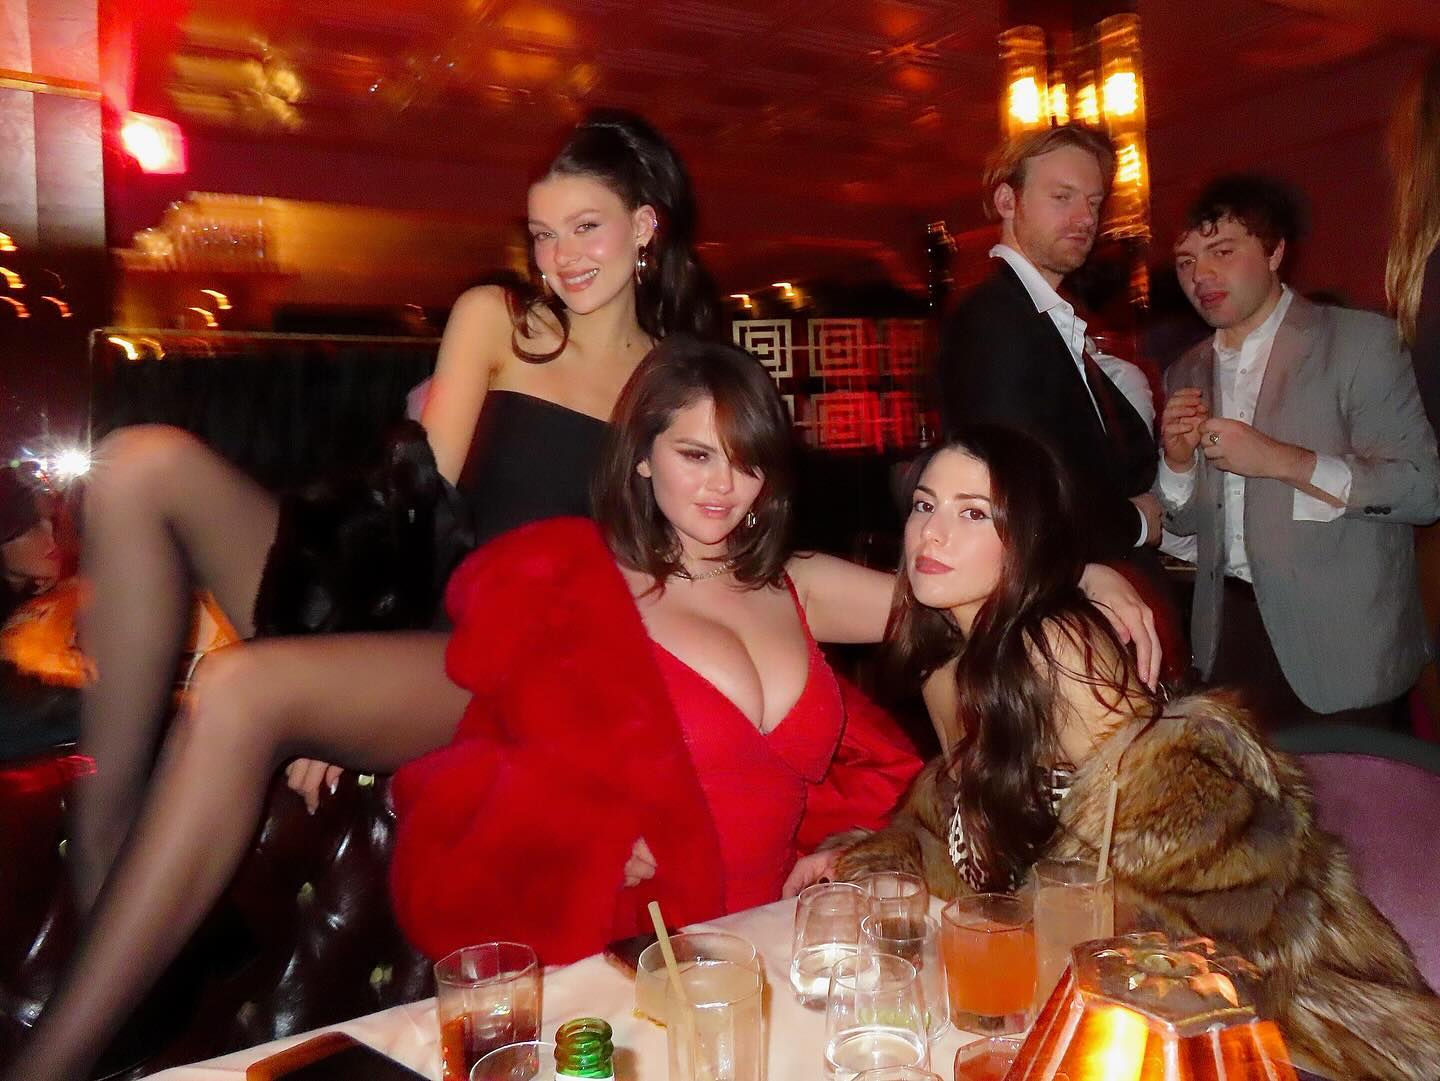 Photos n°10 : Selena Gomez Celebrates in a Red Dress!